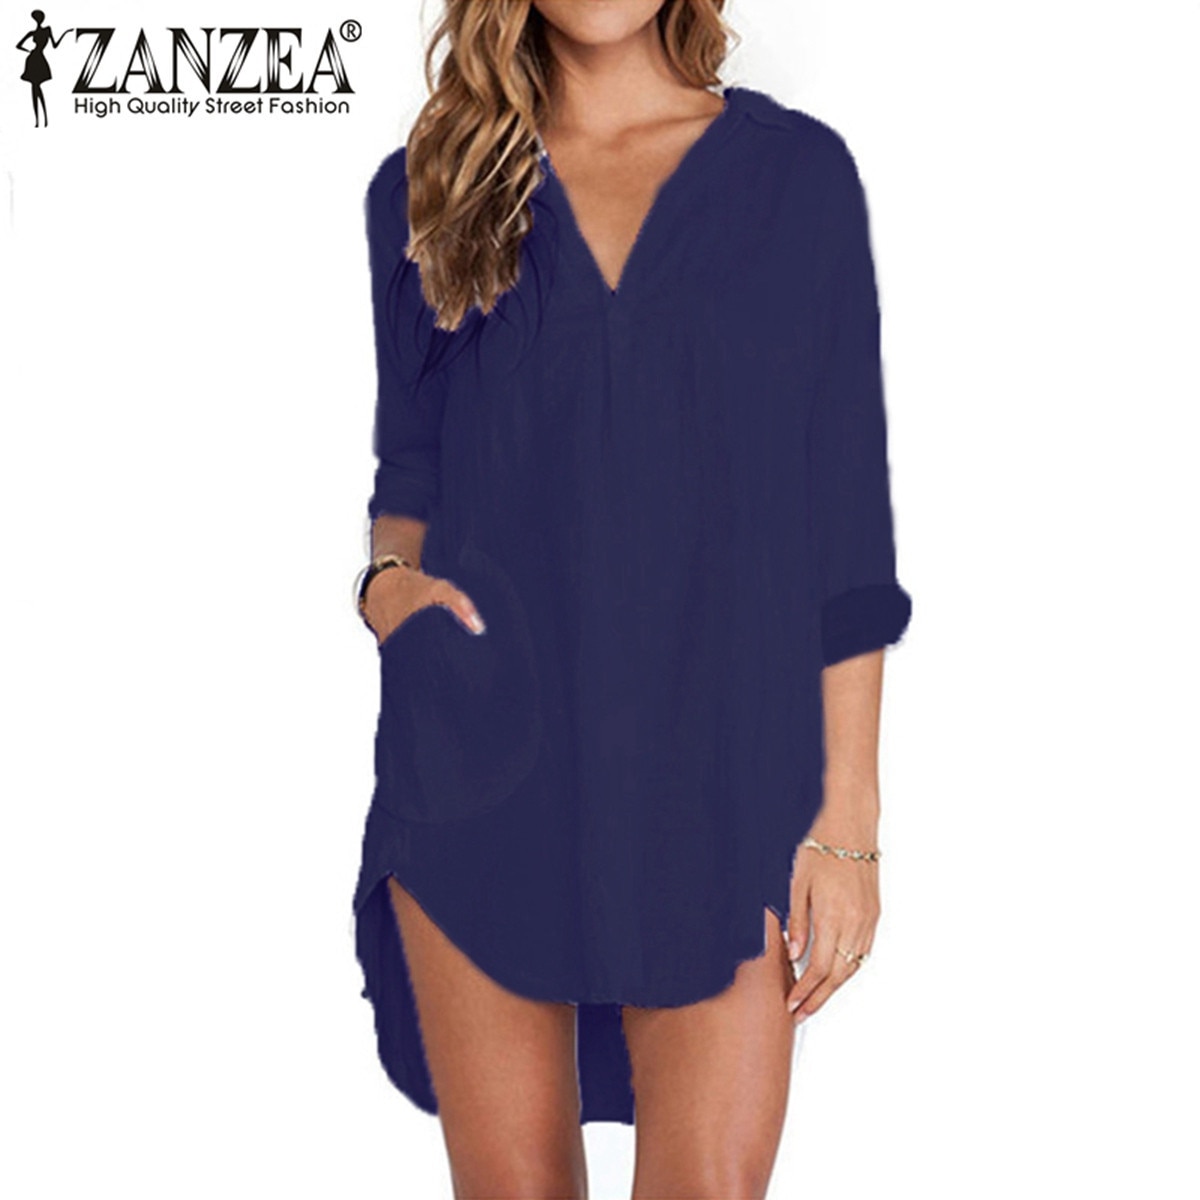 Zanzea Blusas Femininas 2018 Sexy Women See Through Chiffon Shirts Long Sleeve Pocket Casual Blouse Tops Plus Size XS-6XL Image 4